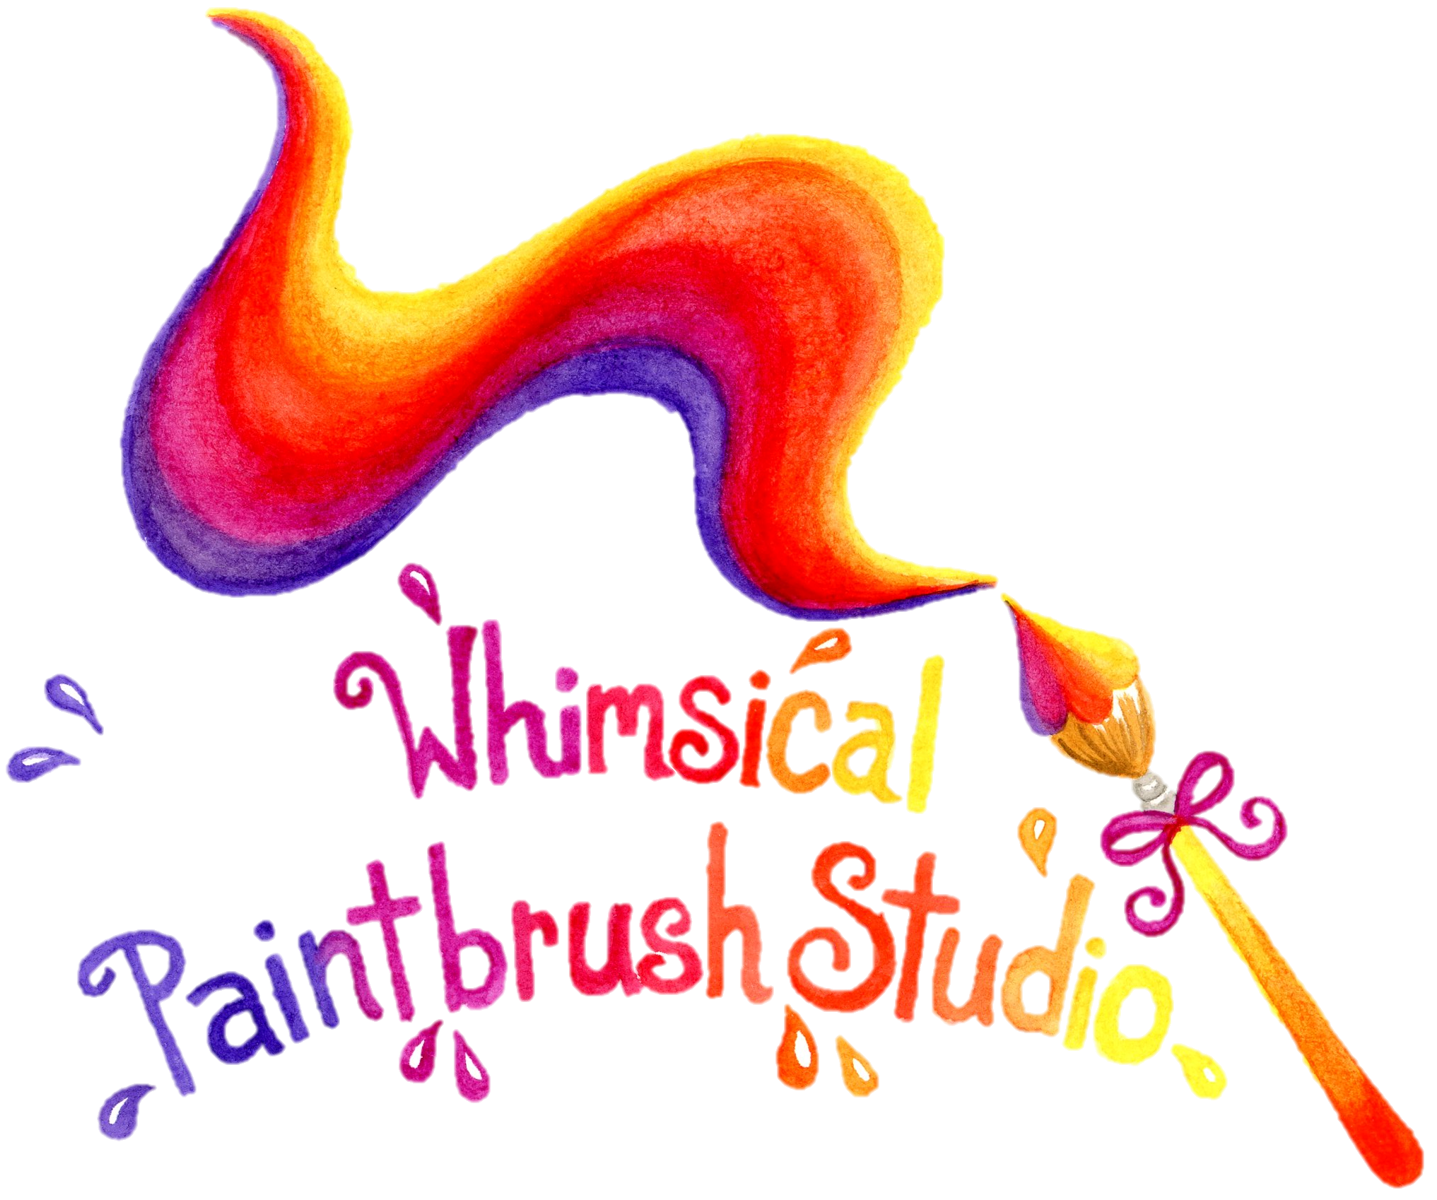 The Whimsical Paintbrush studio